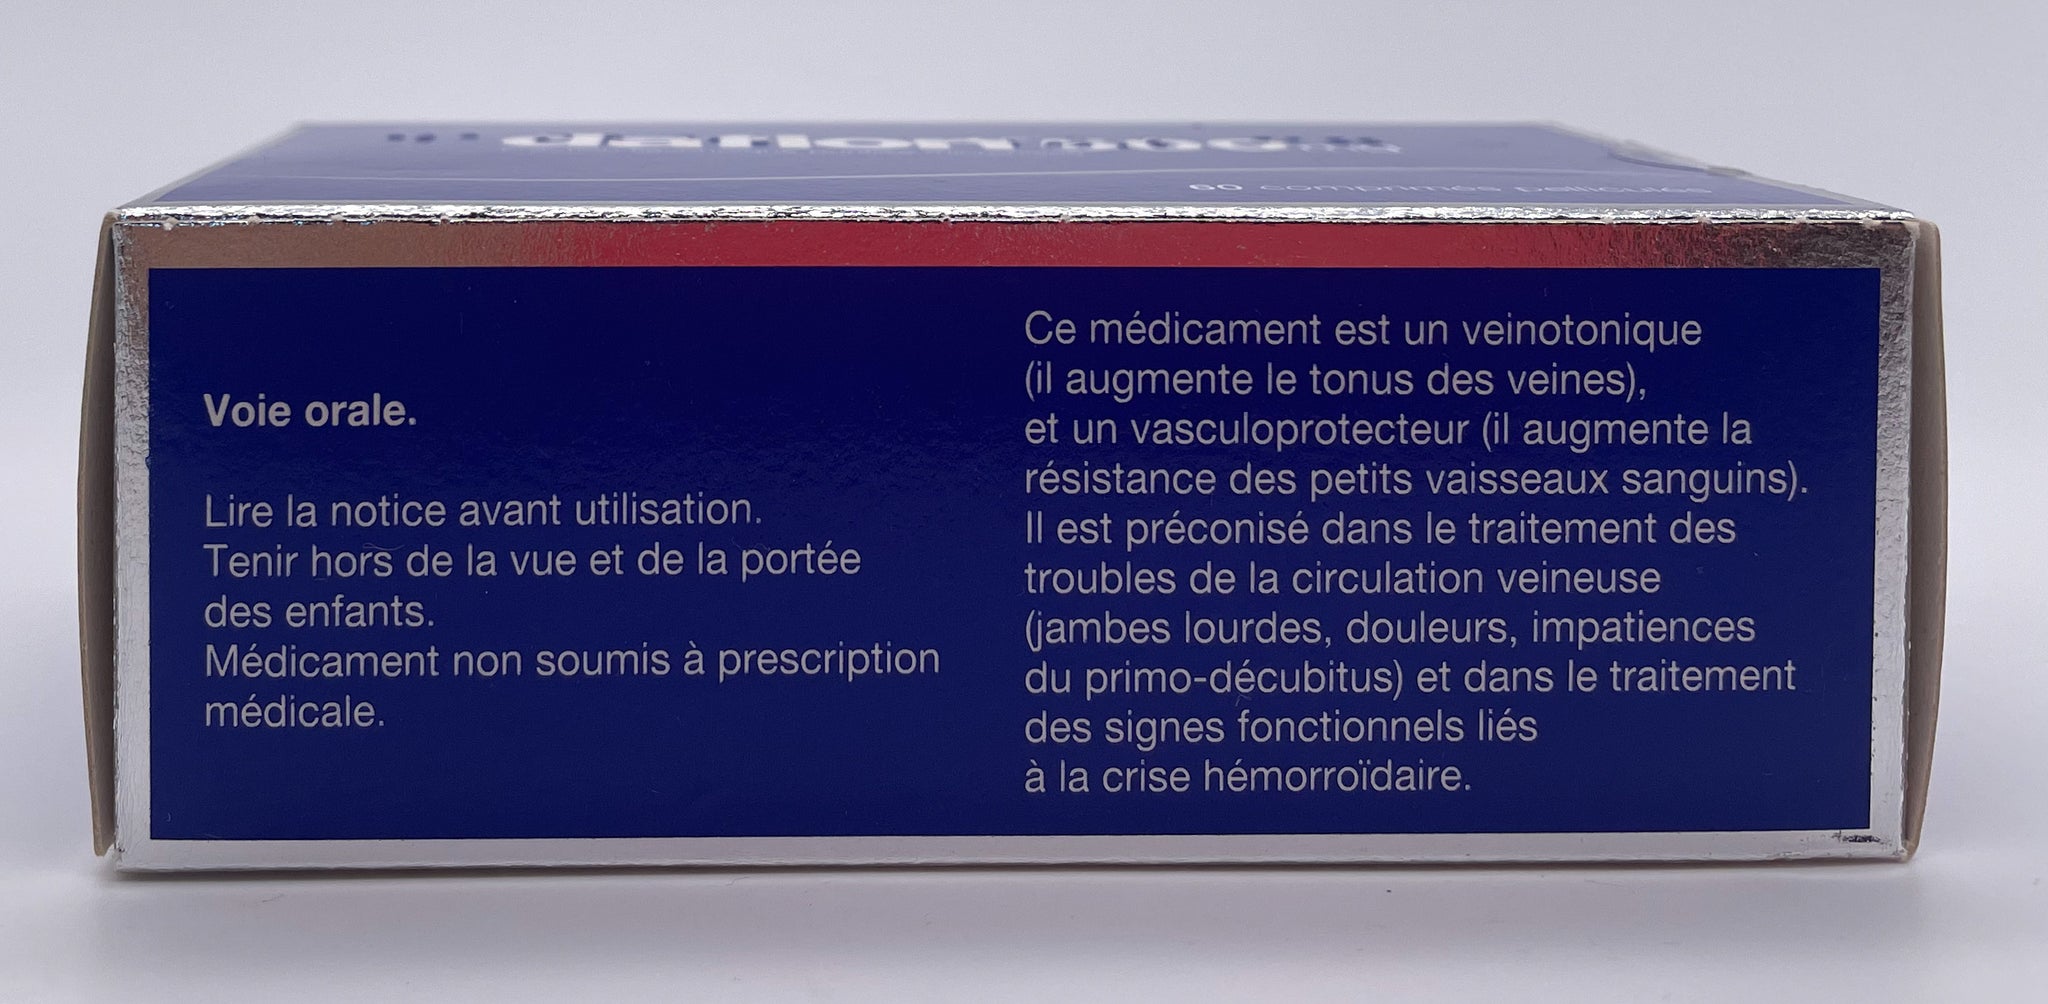 Daflon 1000 mg Full Prescribing Information, Dosage & Side Effects